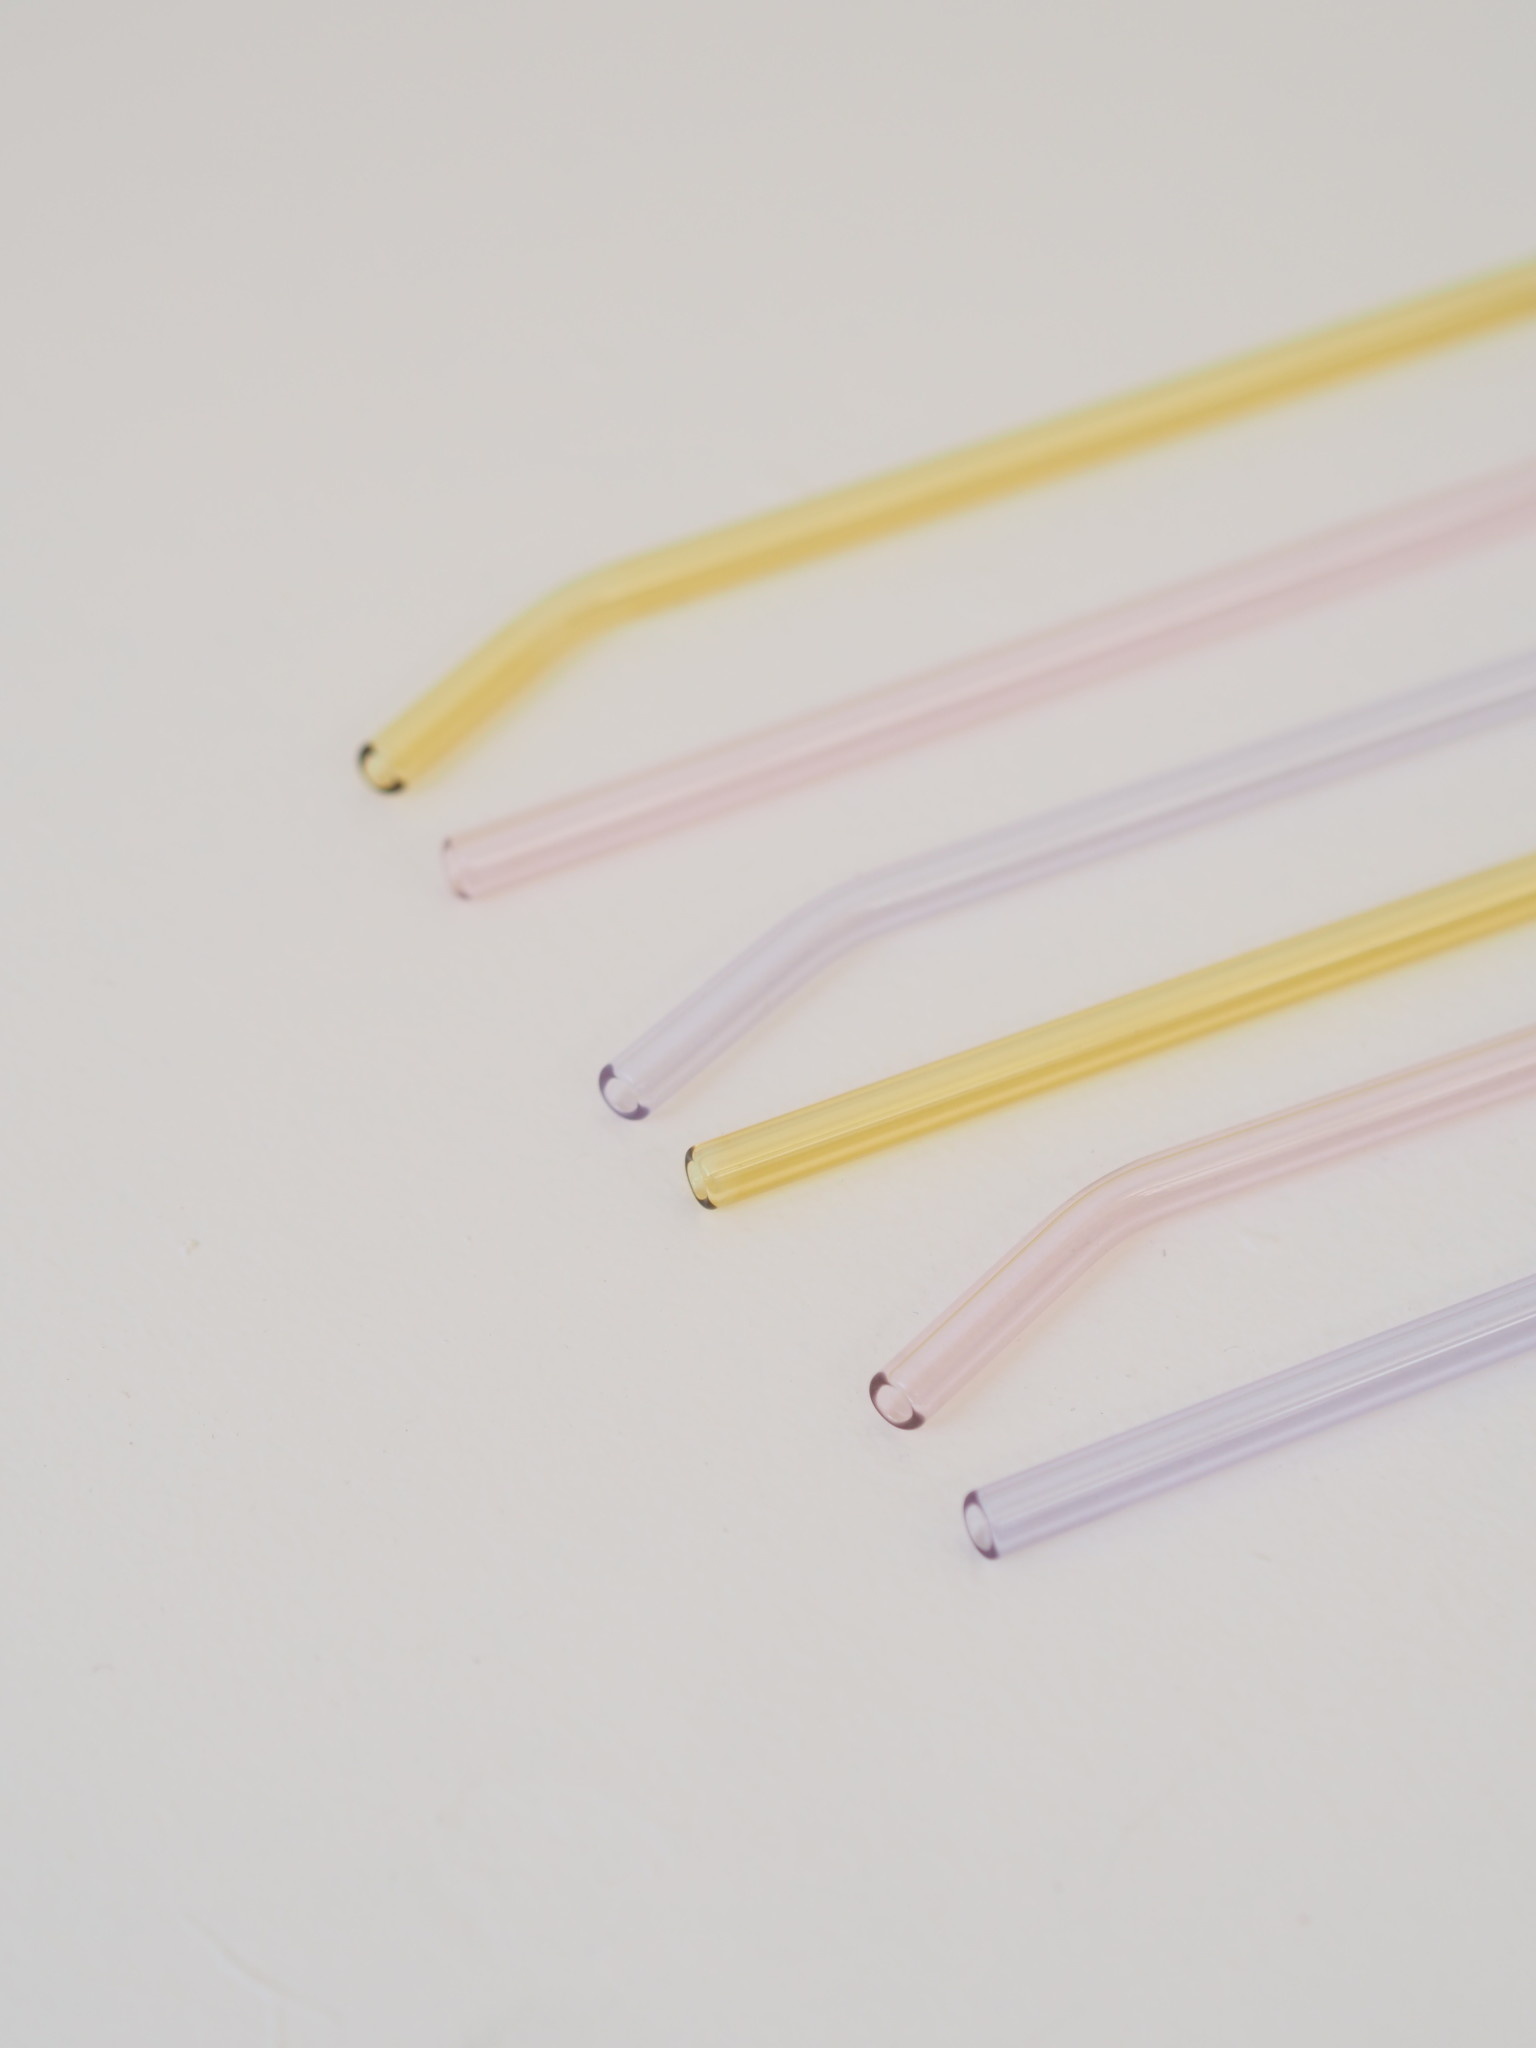 Straws Set of 6 - Pastel